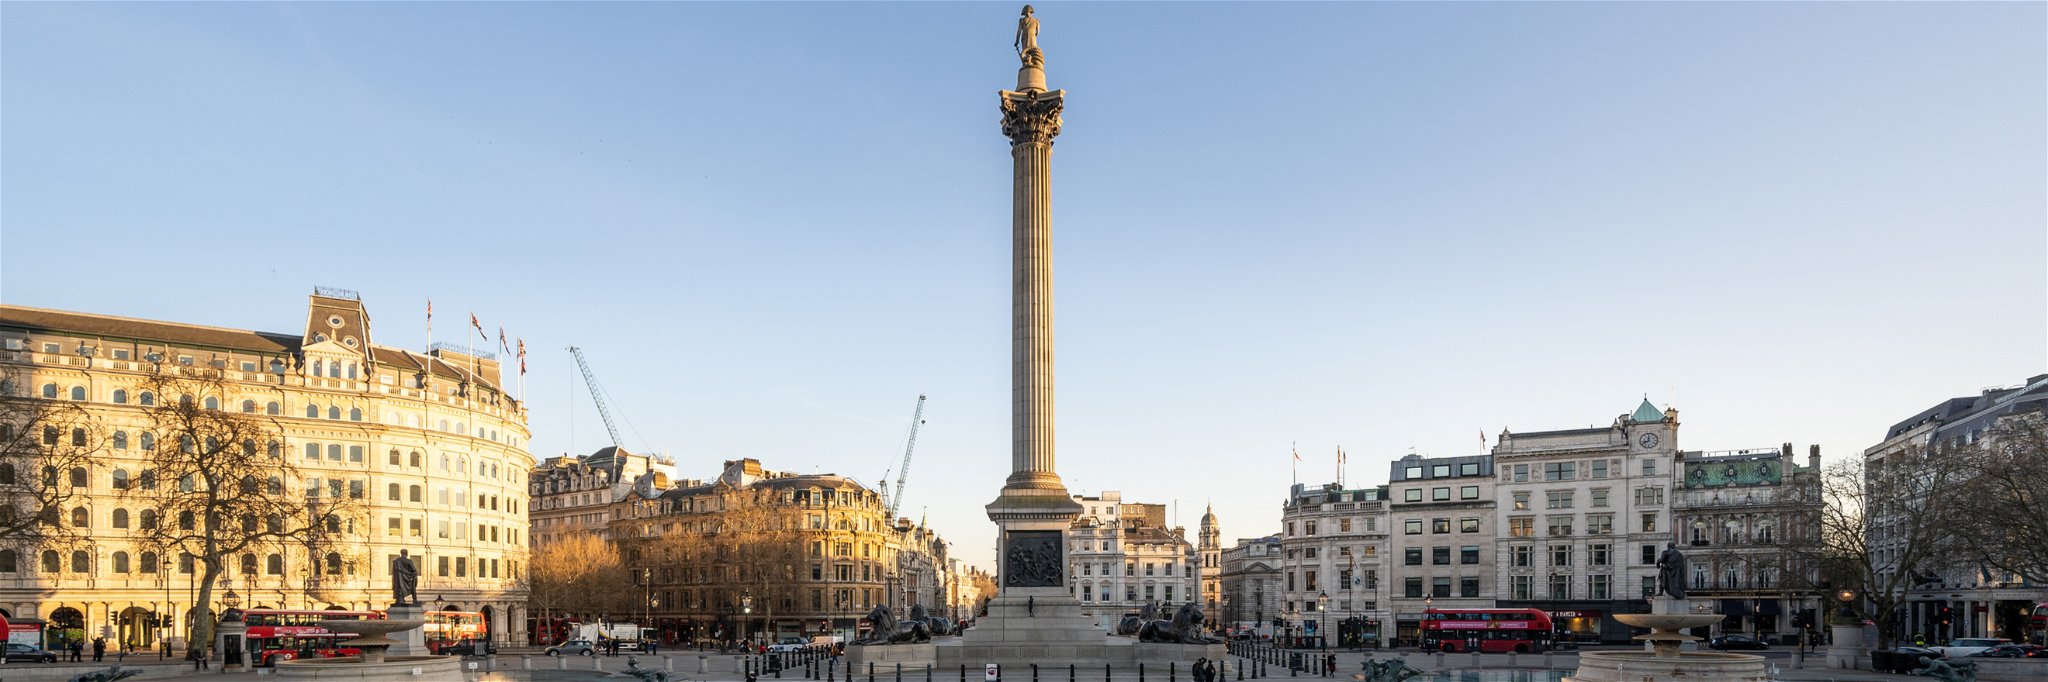 London's&nbsp;Trafalgar Square New Year celebration is cancelled.